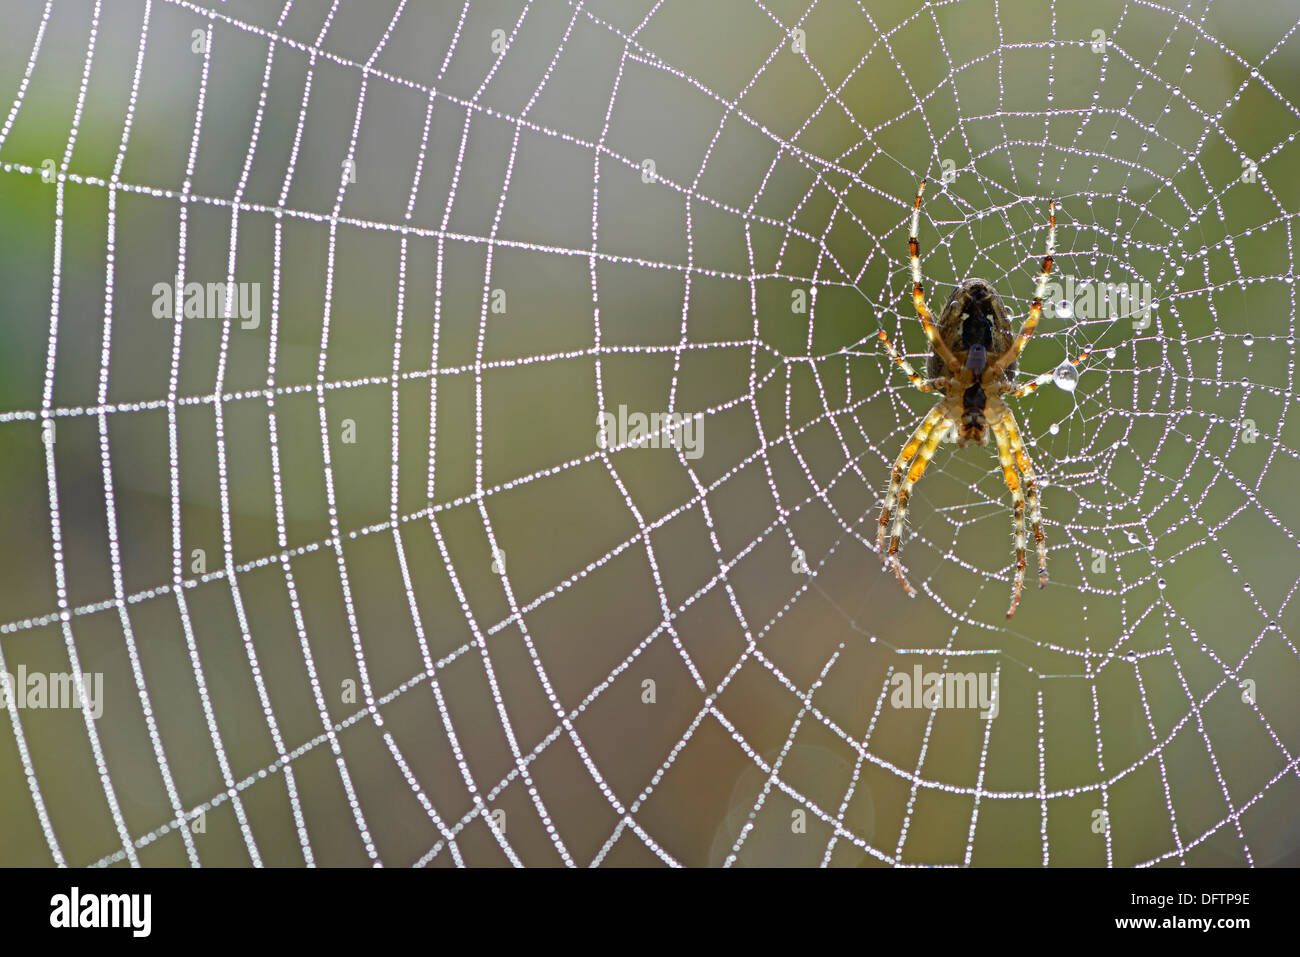 European garden spider (Araneus diadematus) in the web, Lower Saxony, Germany Stock Photo